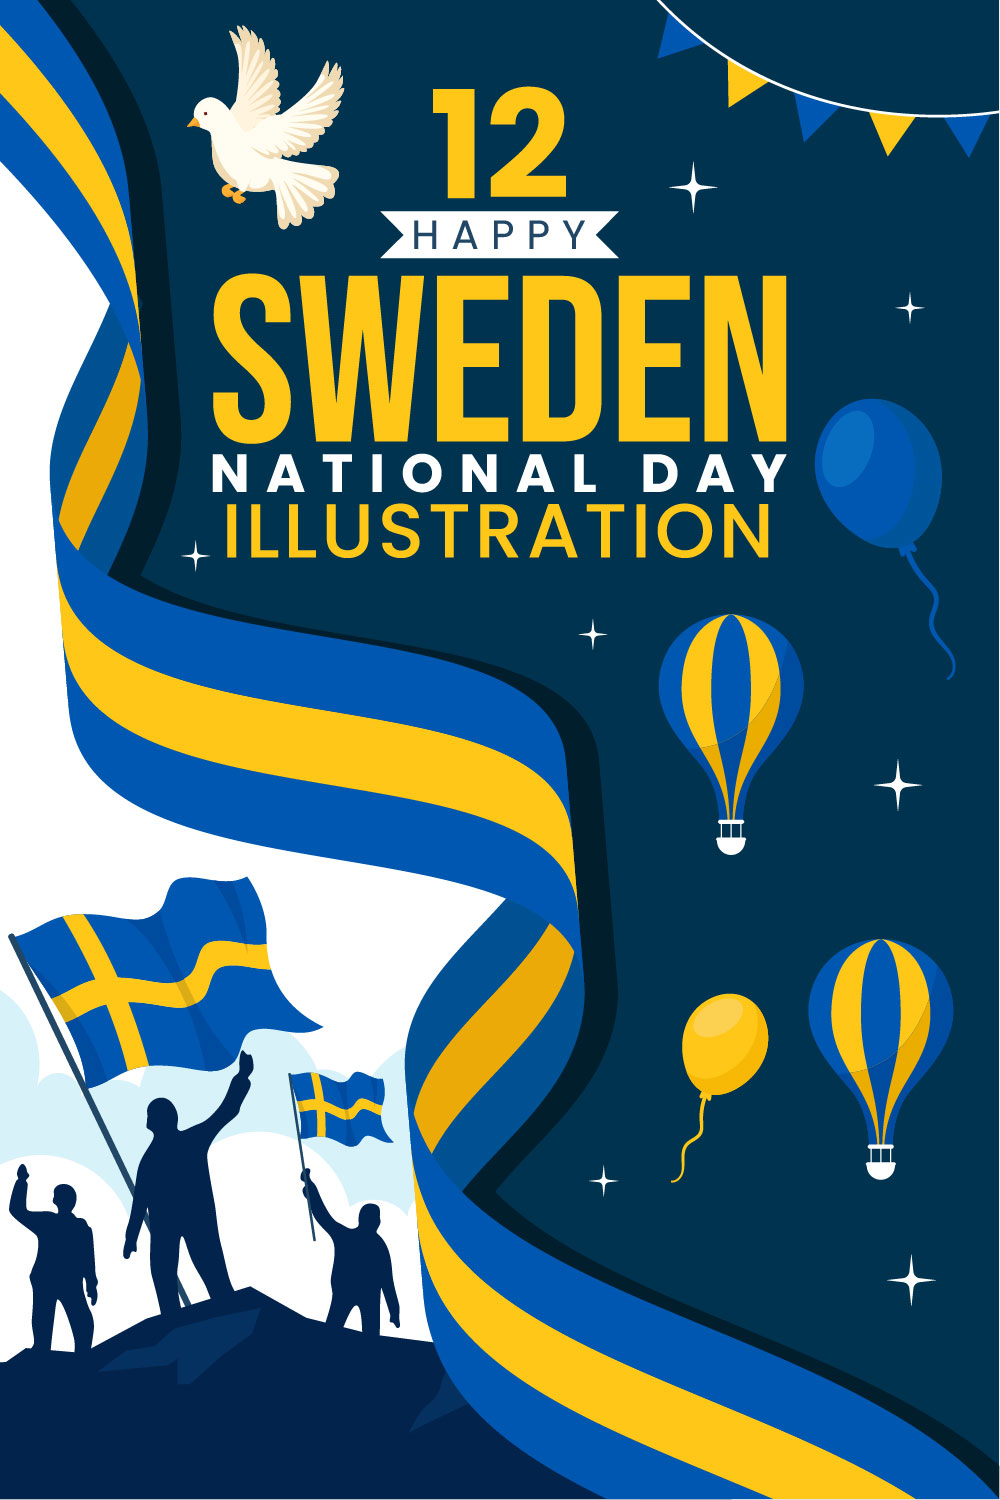 12 Sweden National Day Illustration pinterest preview image.